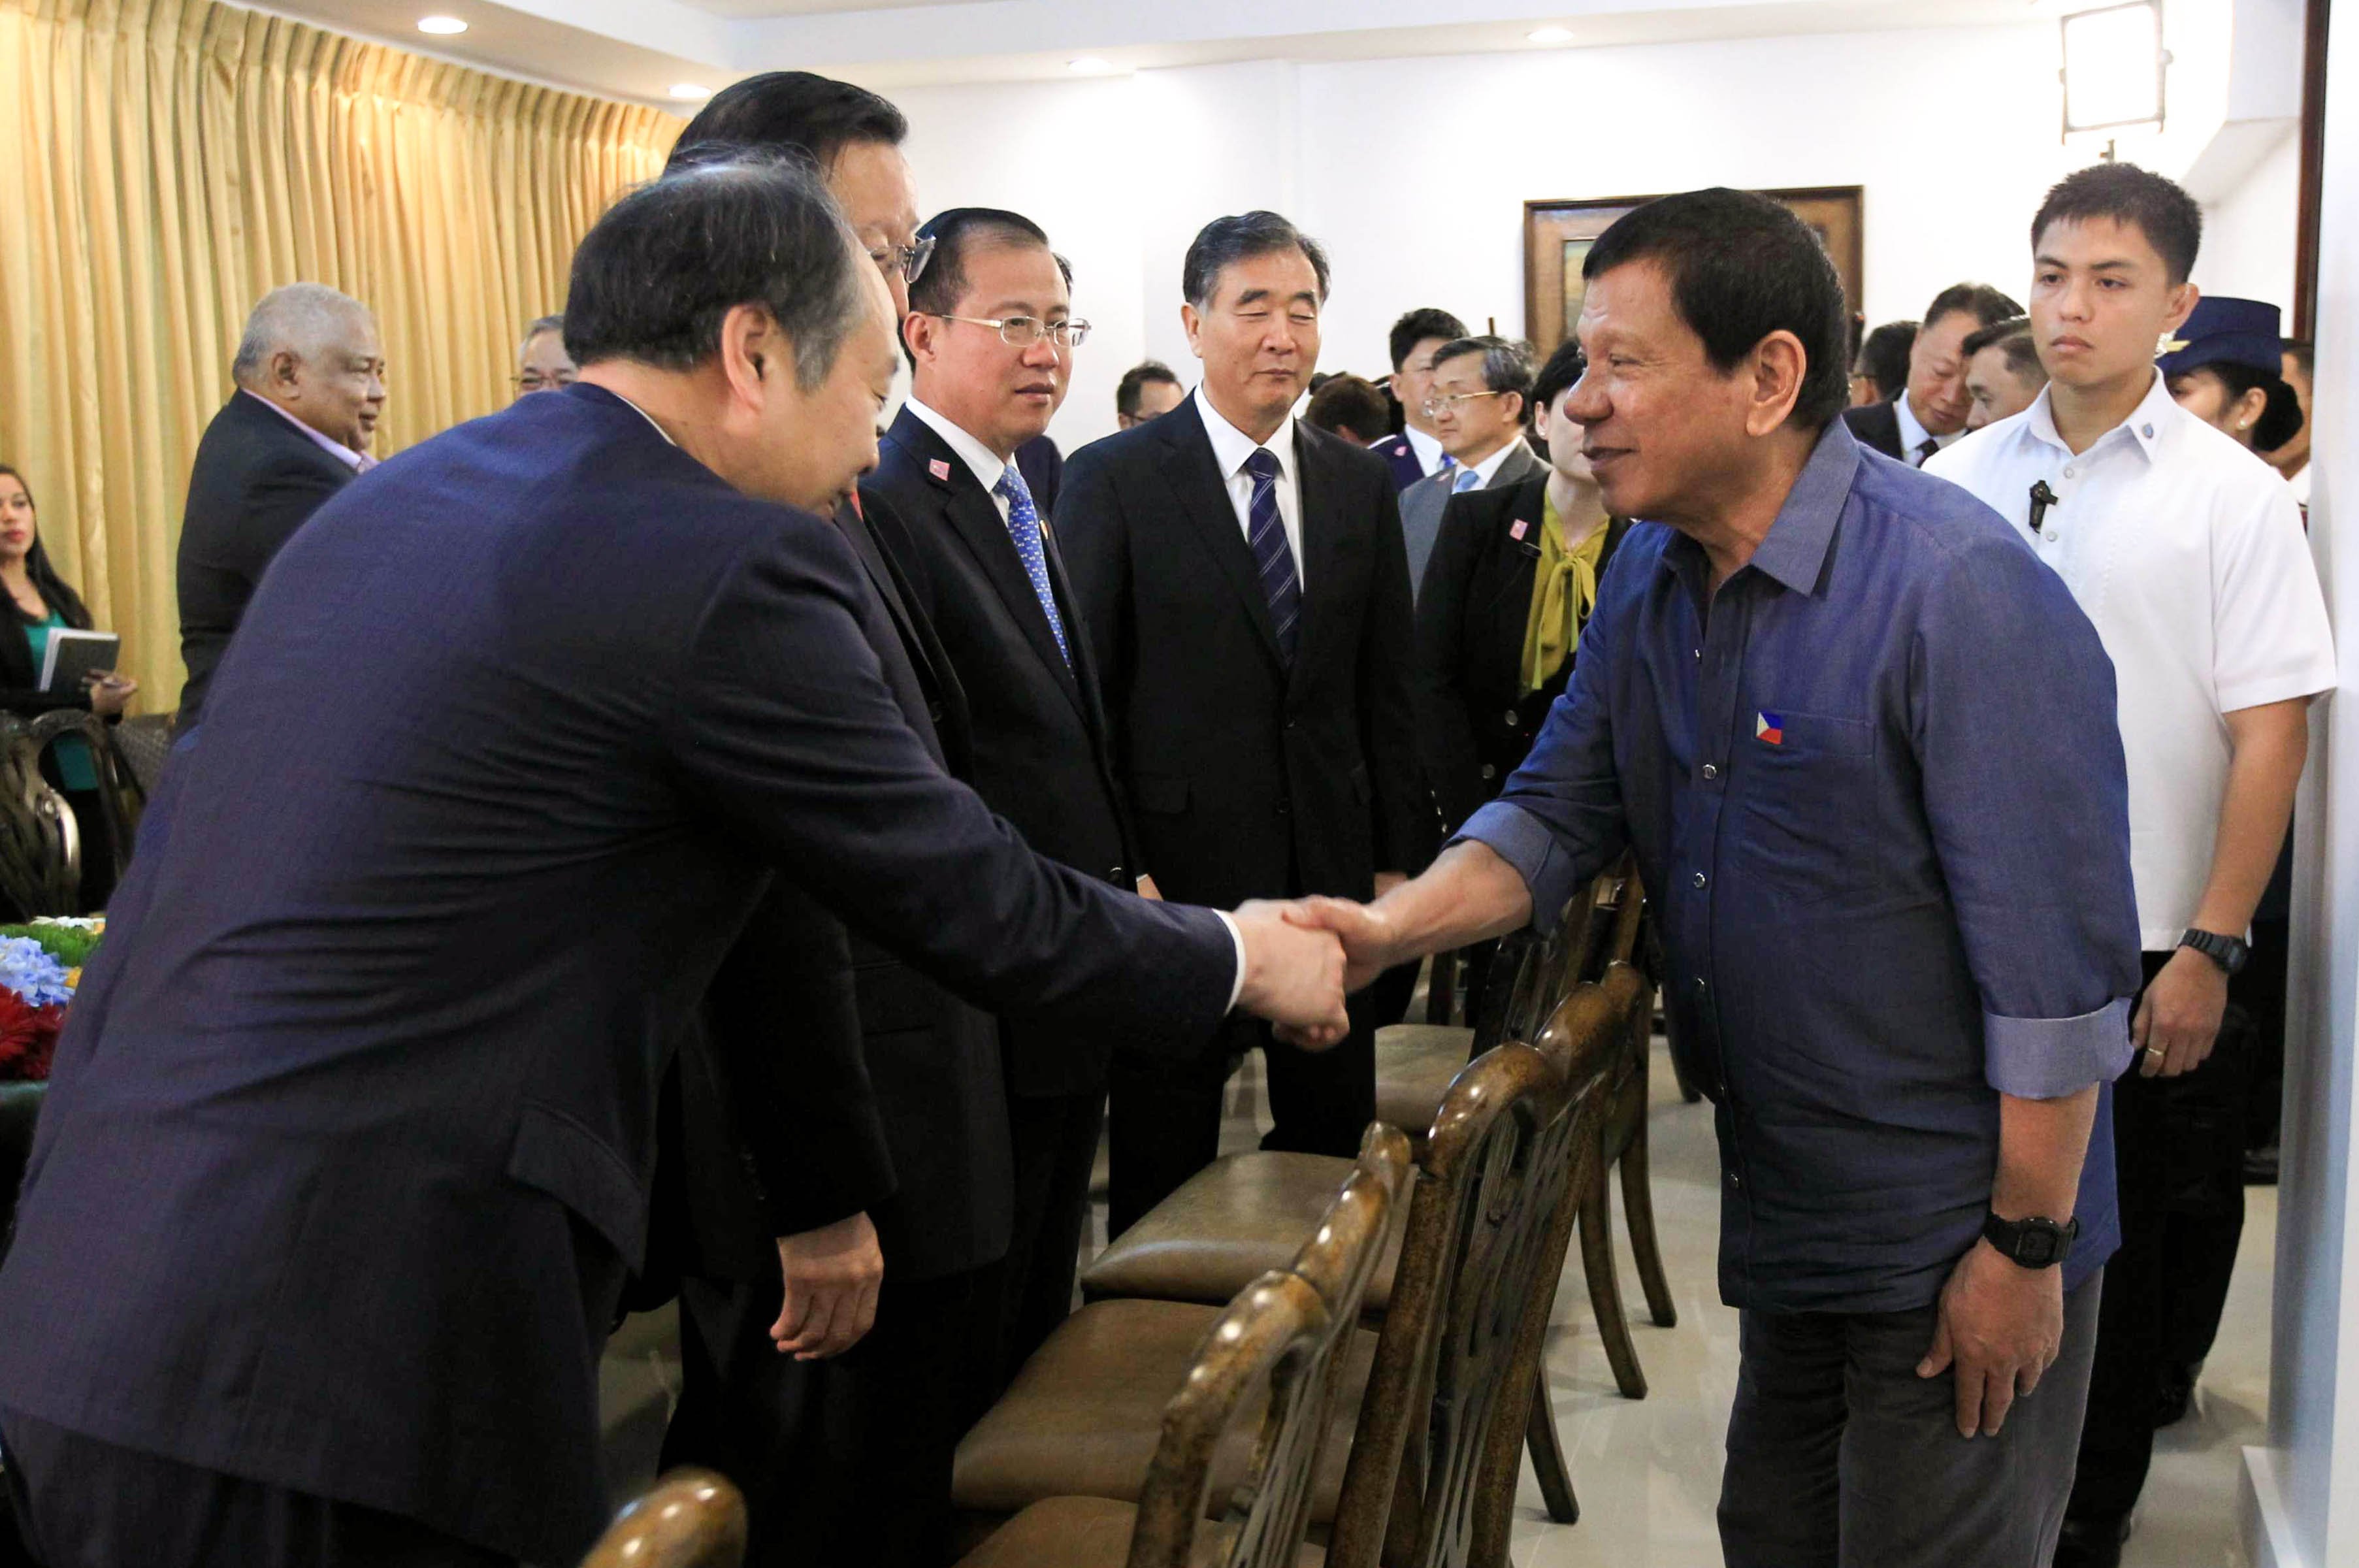 President Rodrigo Roa Duterte greets National Development and Reform Commission Vice Chairman Wang Xiaotao